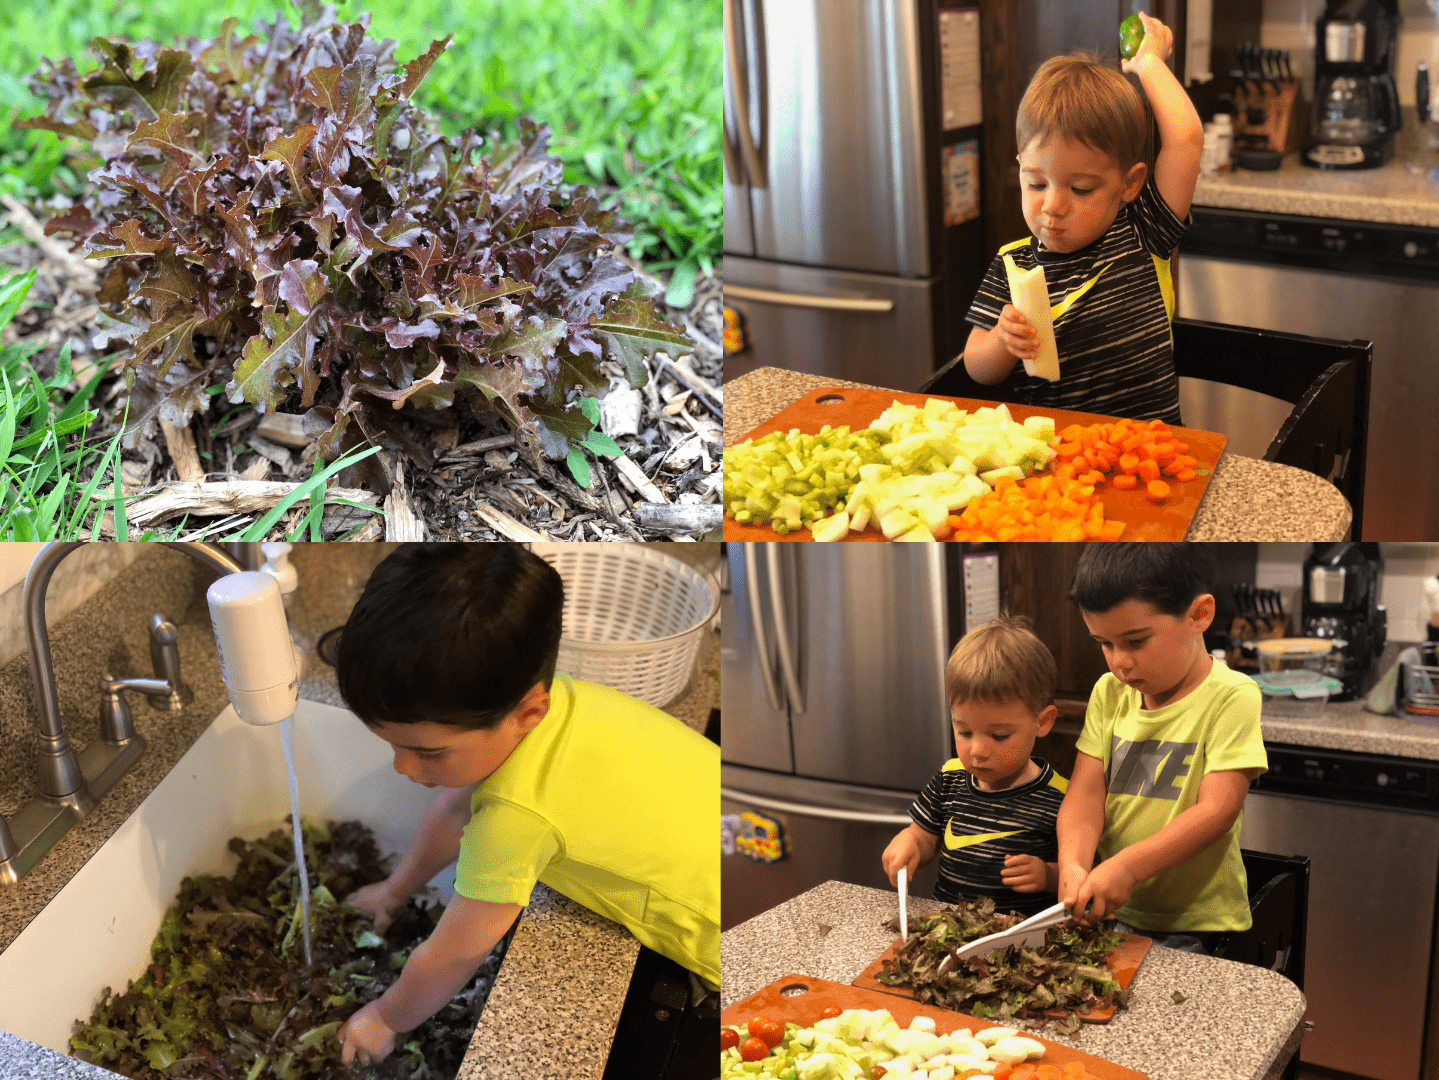 Boys prepairing lettuce:salad